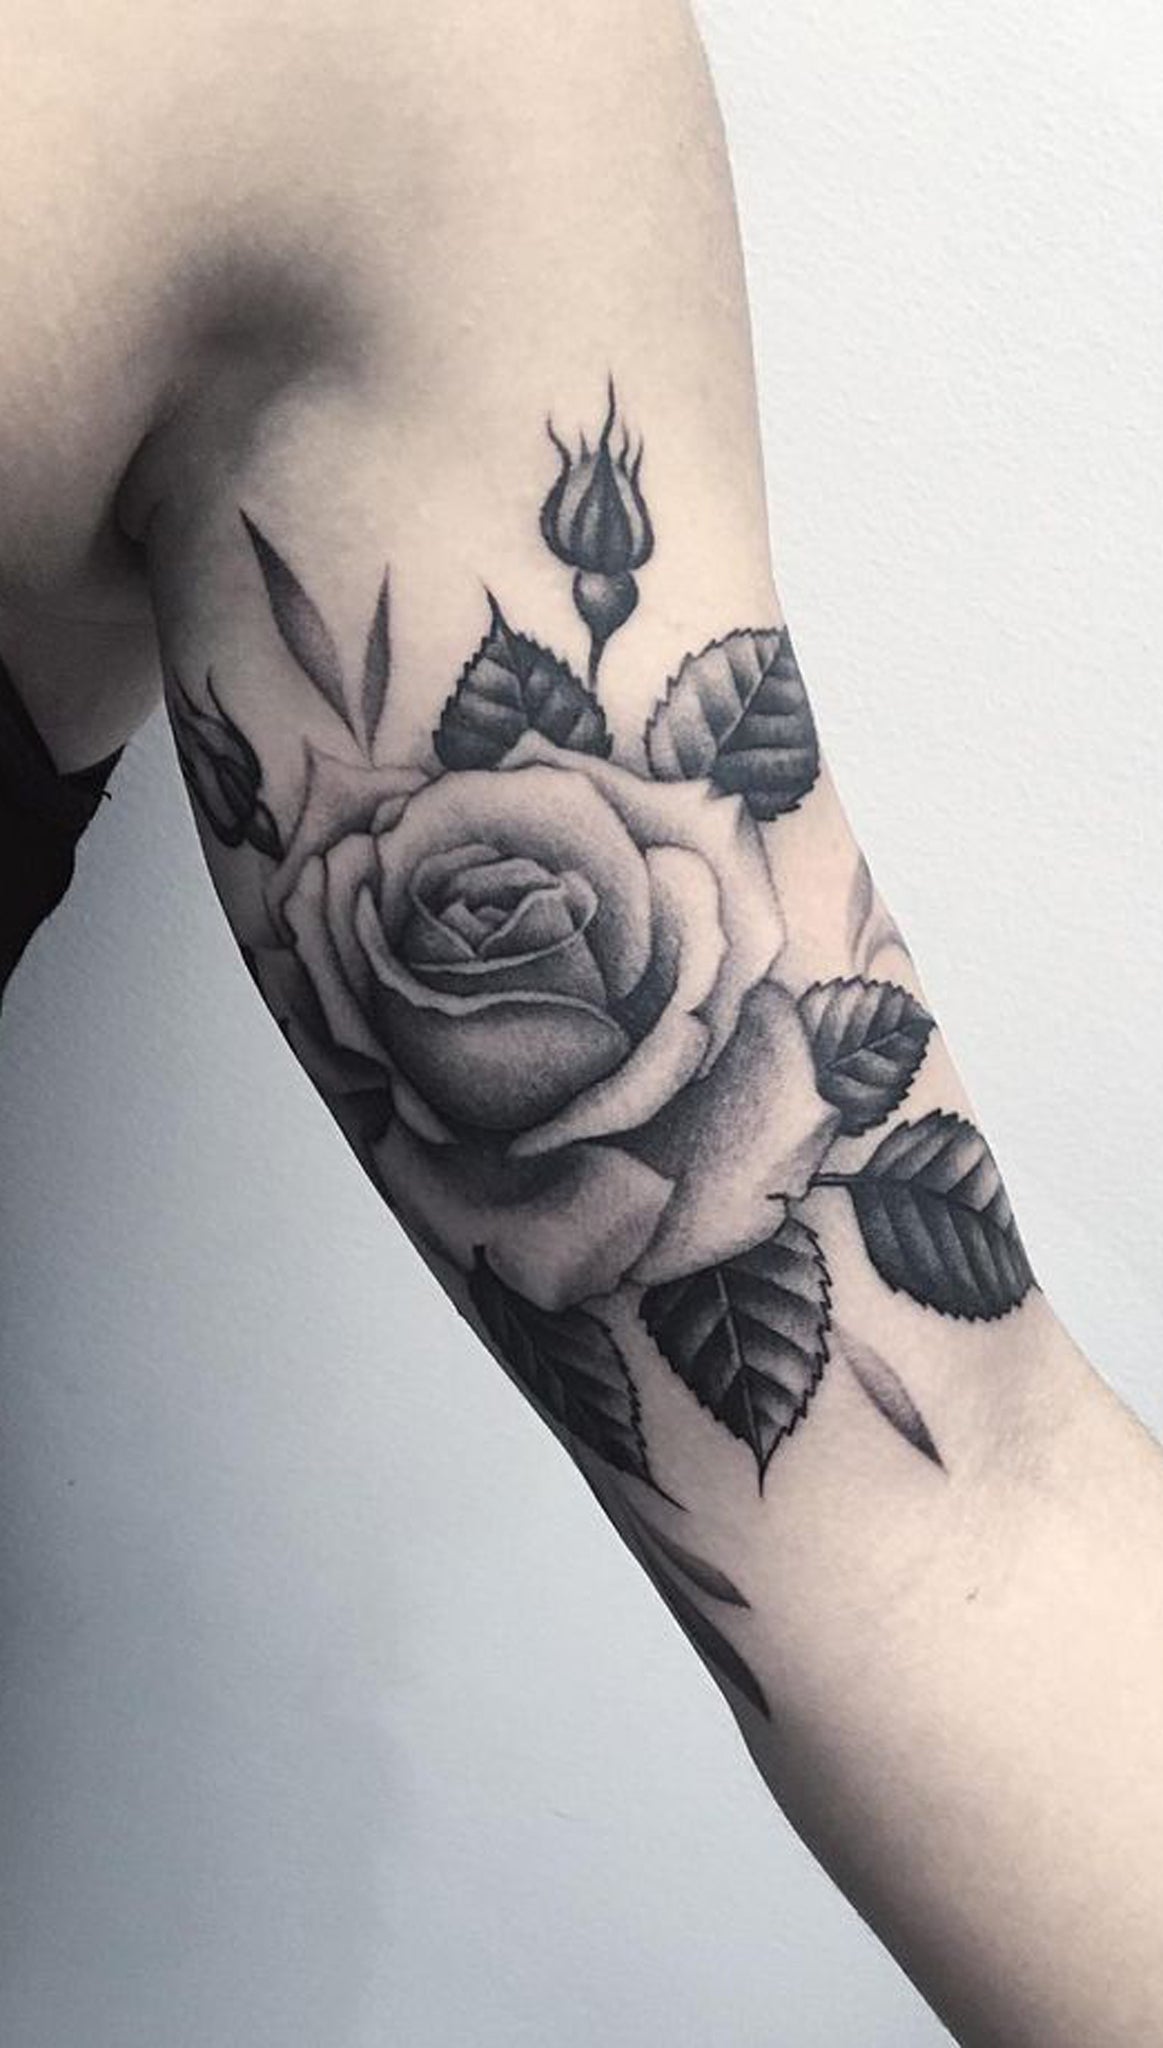 Rose Arm Bicep Tattoo Ideas for Women - Black & White Vintage Realistic Floral Flower Tat - ideas de tatuaje de brazo de rosa bíceps para las mujeres chicas - www.MyBodiArt.com 